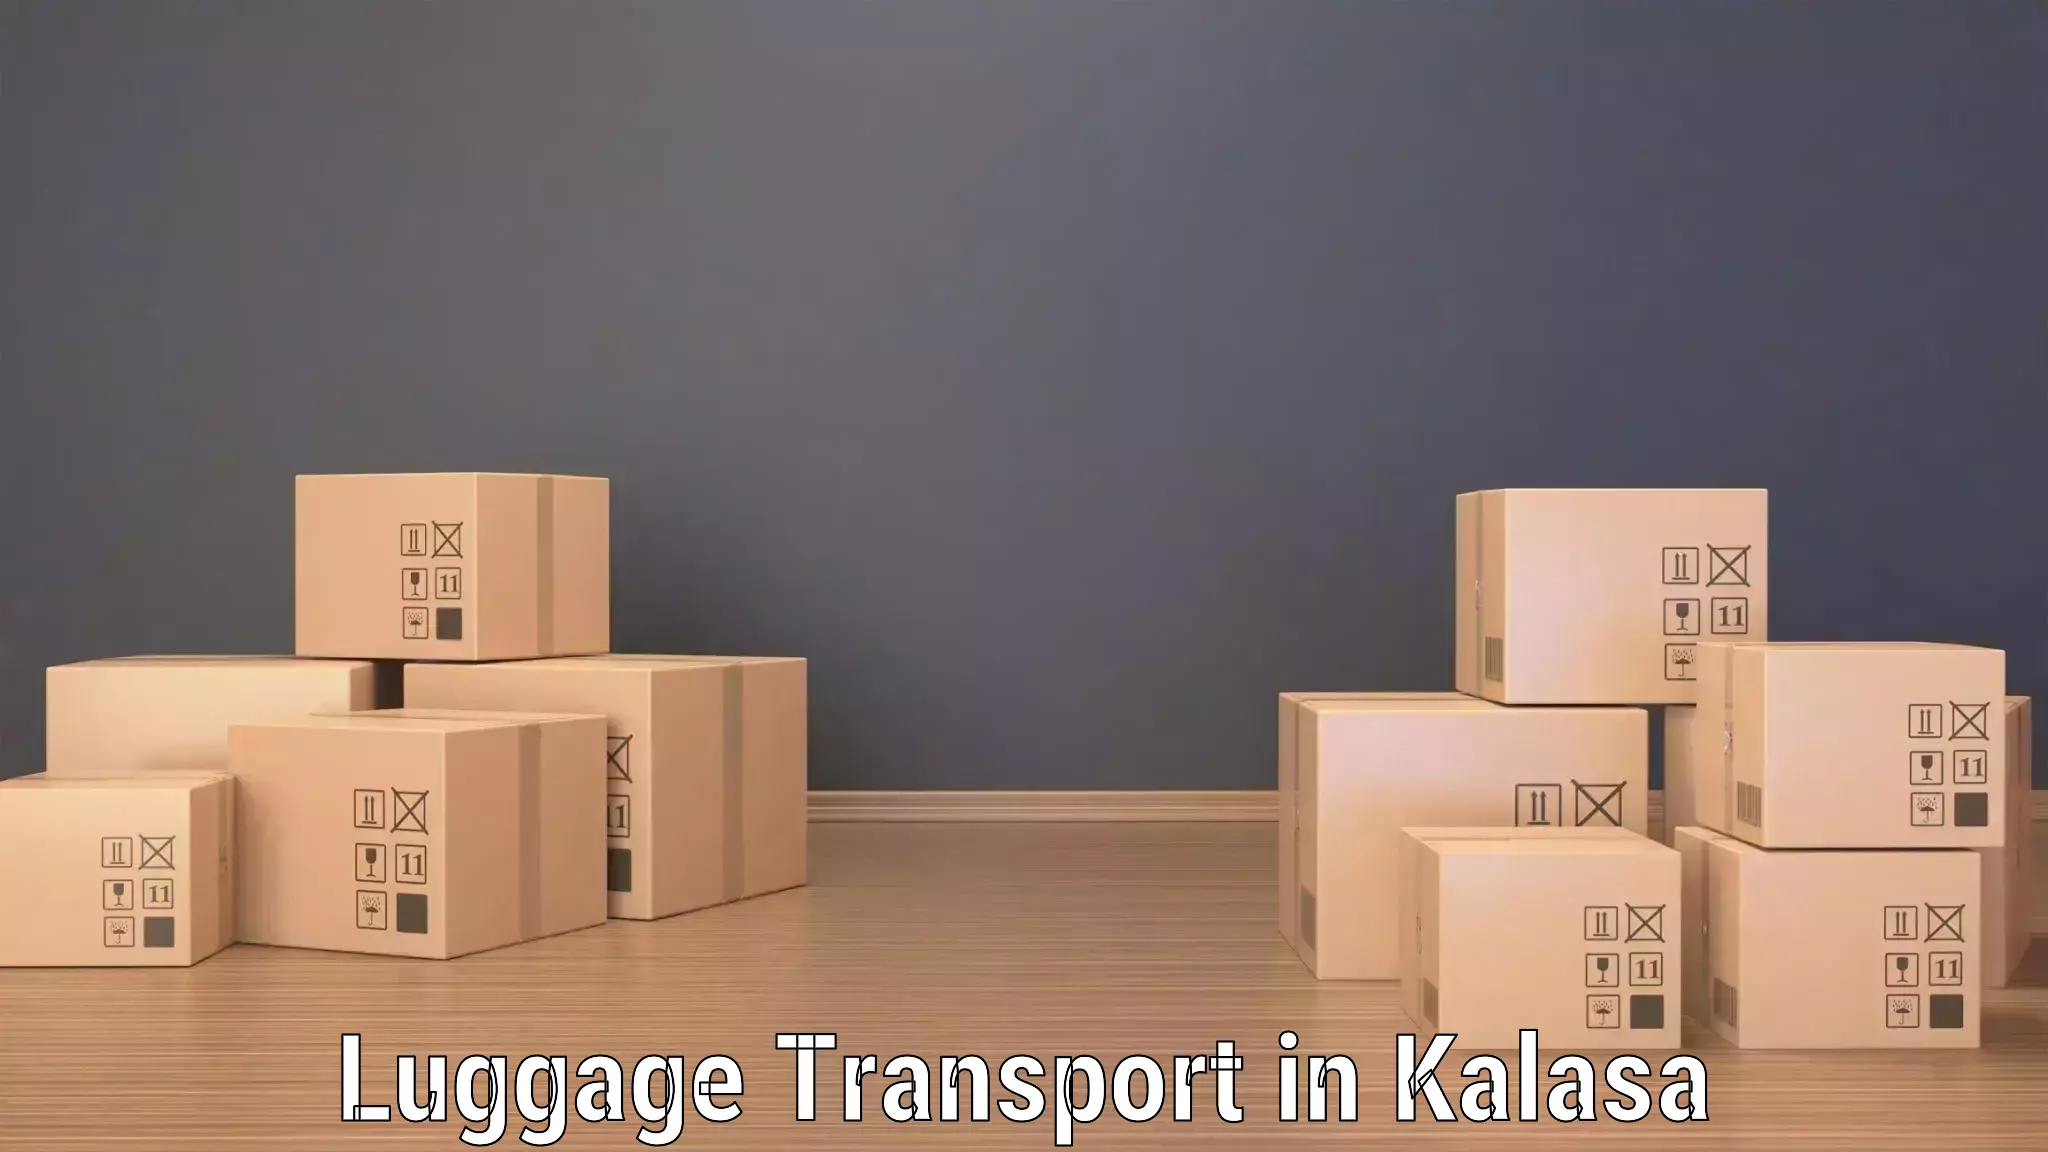 Luggage transport operations in Kalasa